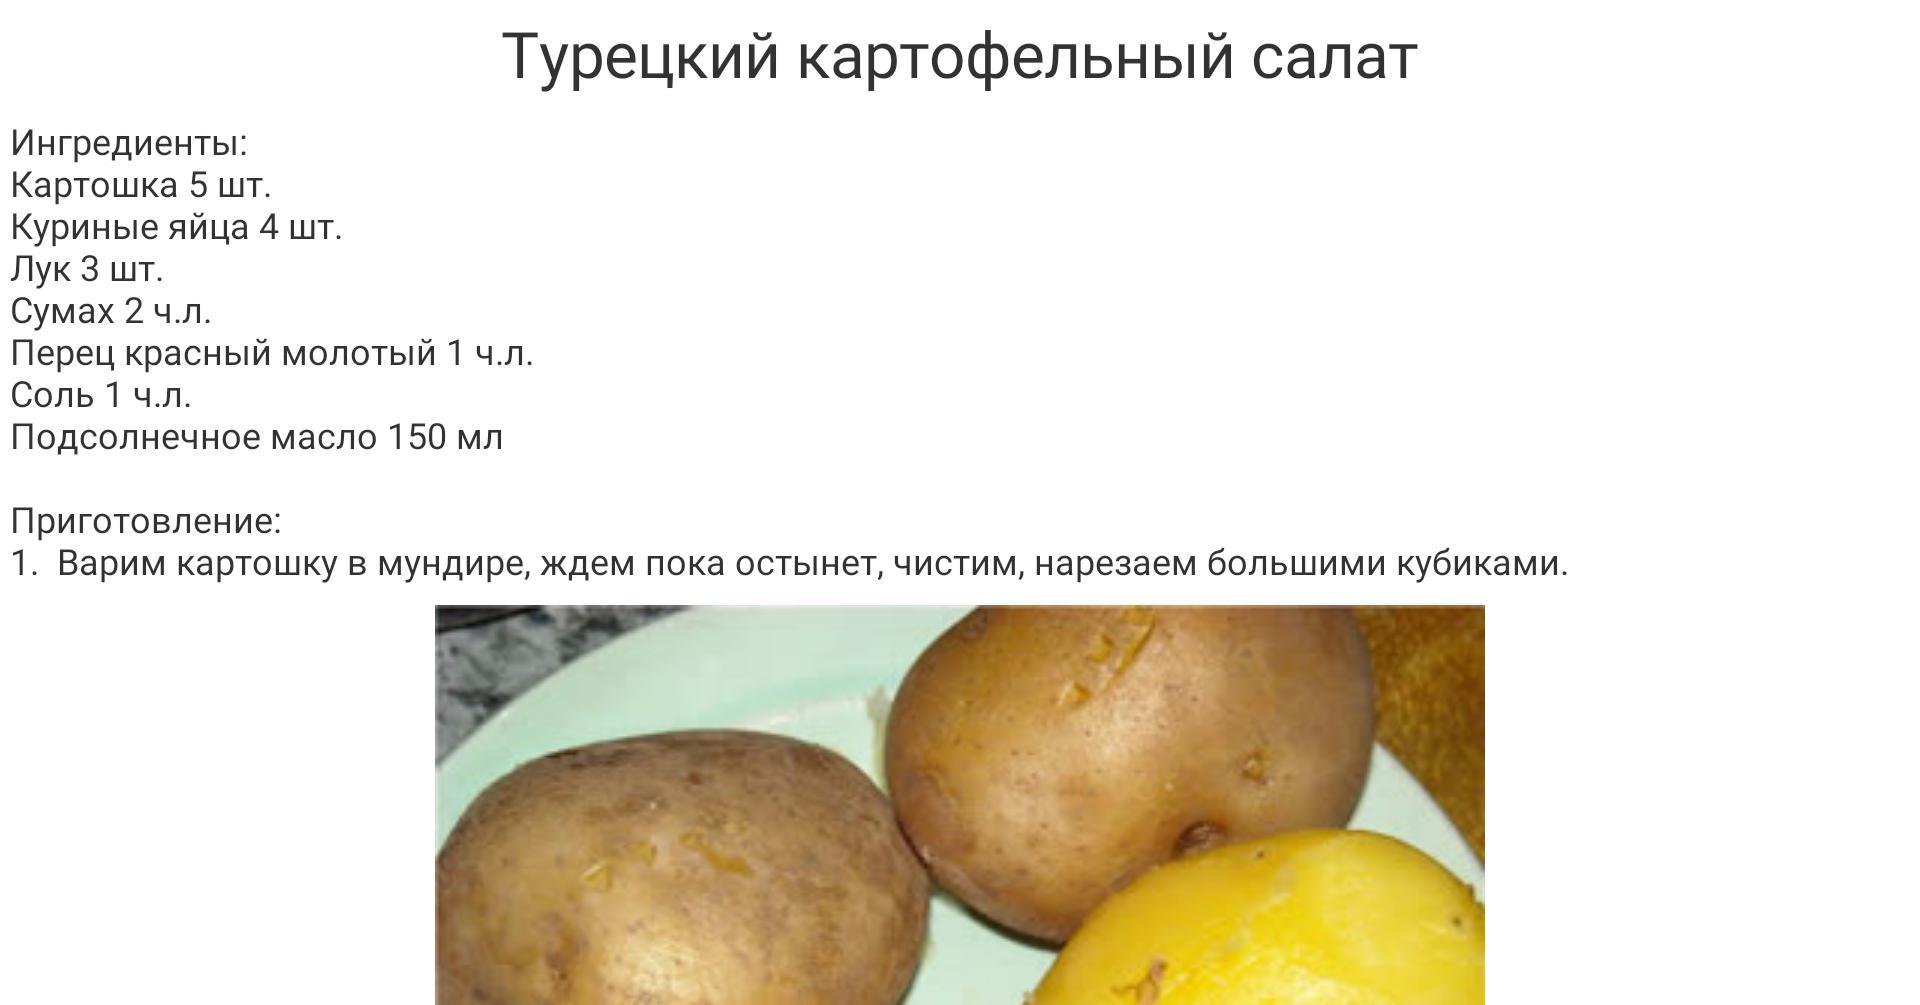 Алгоритм варки картофеля в мундире